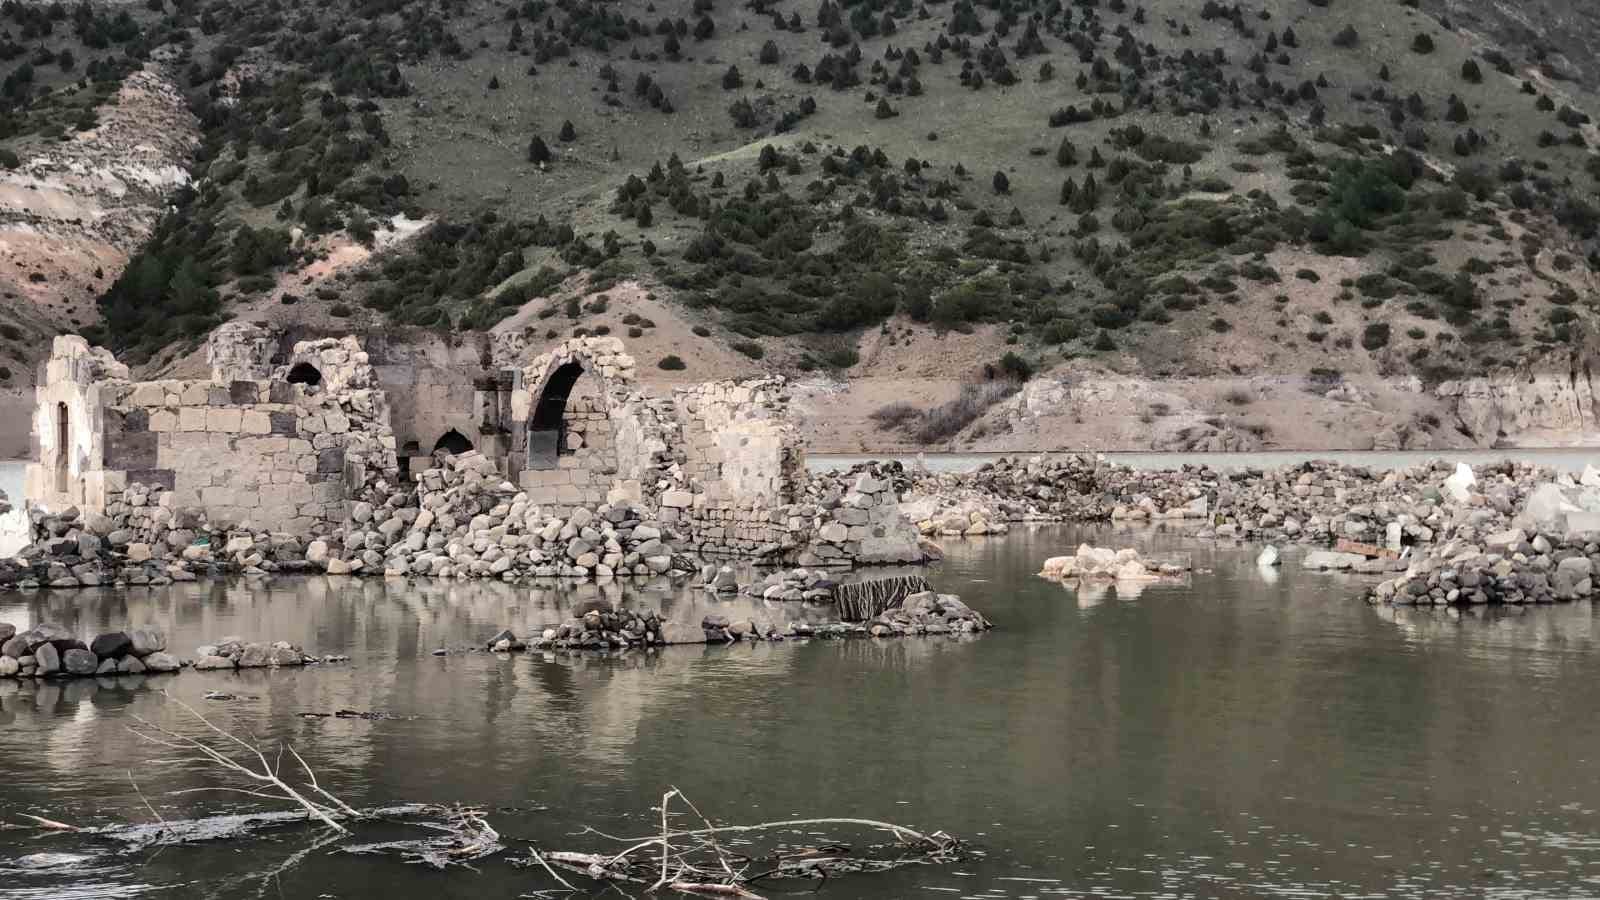 karsta baraj kapaklari kapandi eski koy sular altinda kaldi 8 NHCzNQGp